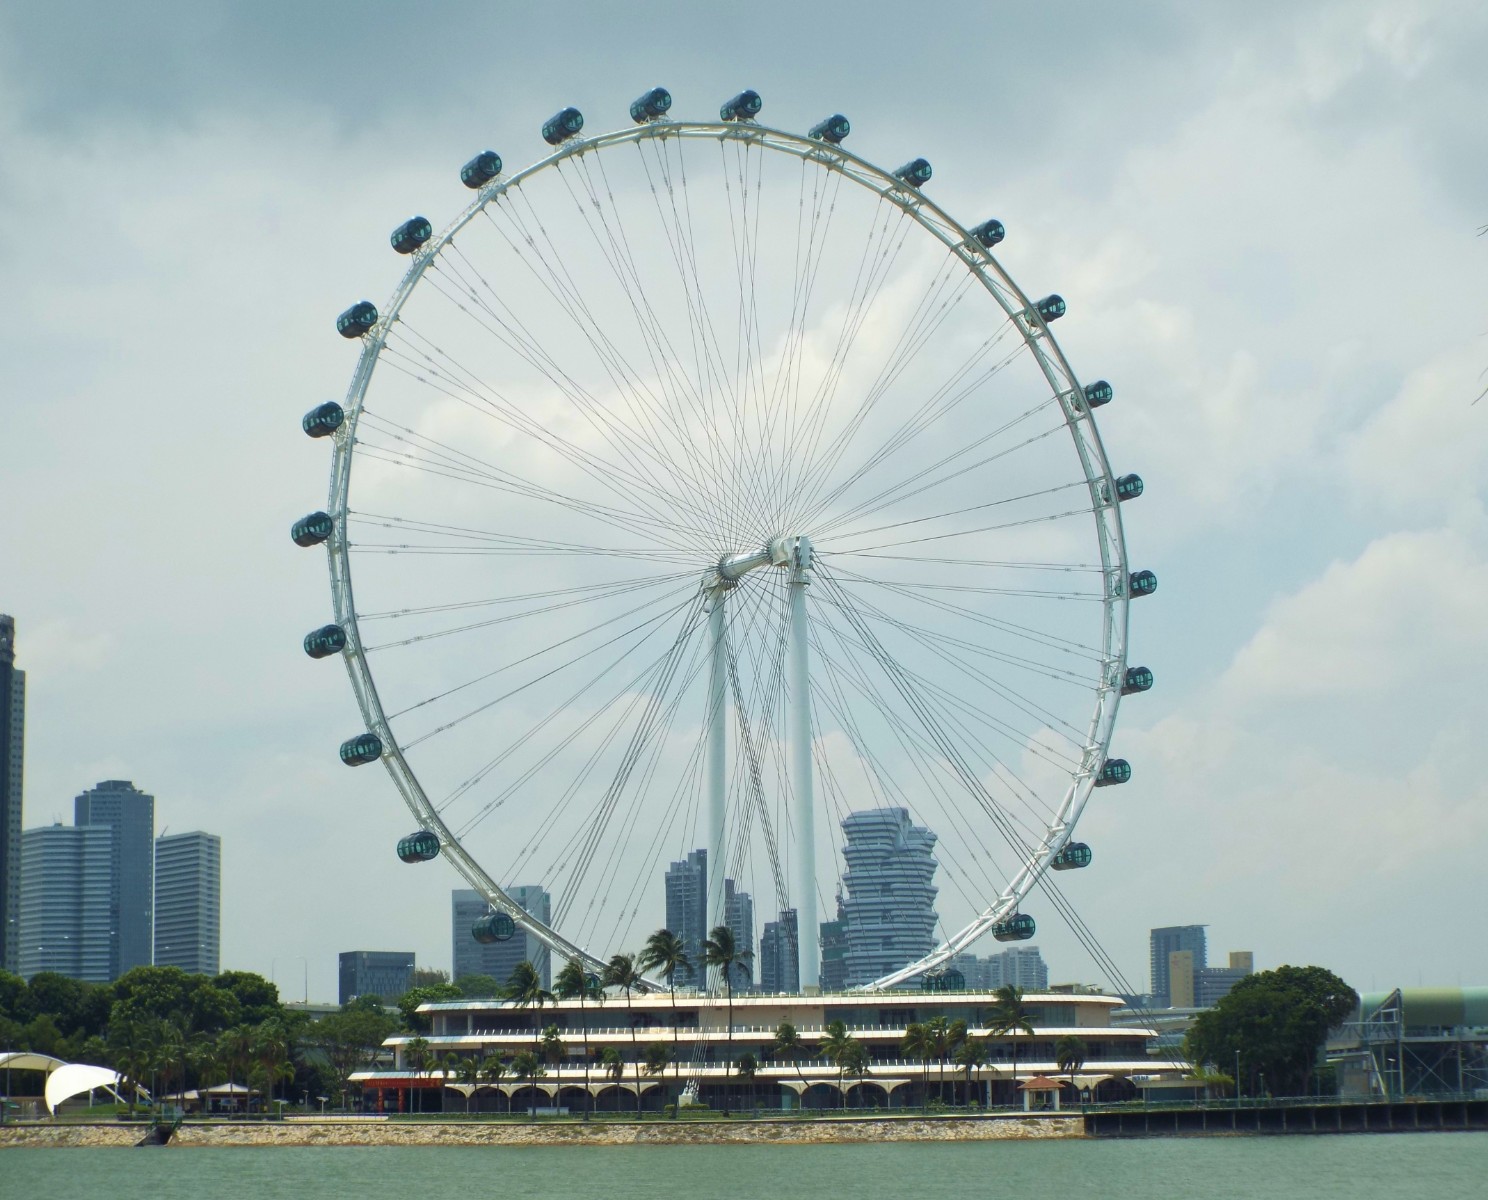 Singapore flyer, Structure | Wheel | Passenger | Sky | River | Metal | Pods | Architecture | City | Singapore | Glass | Travel